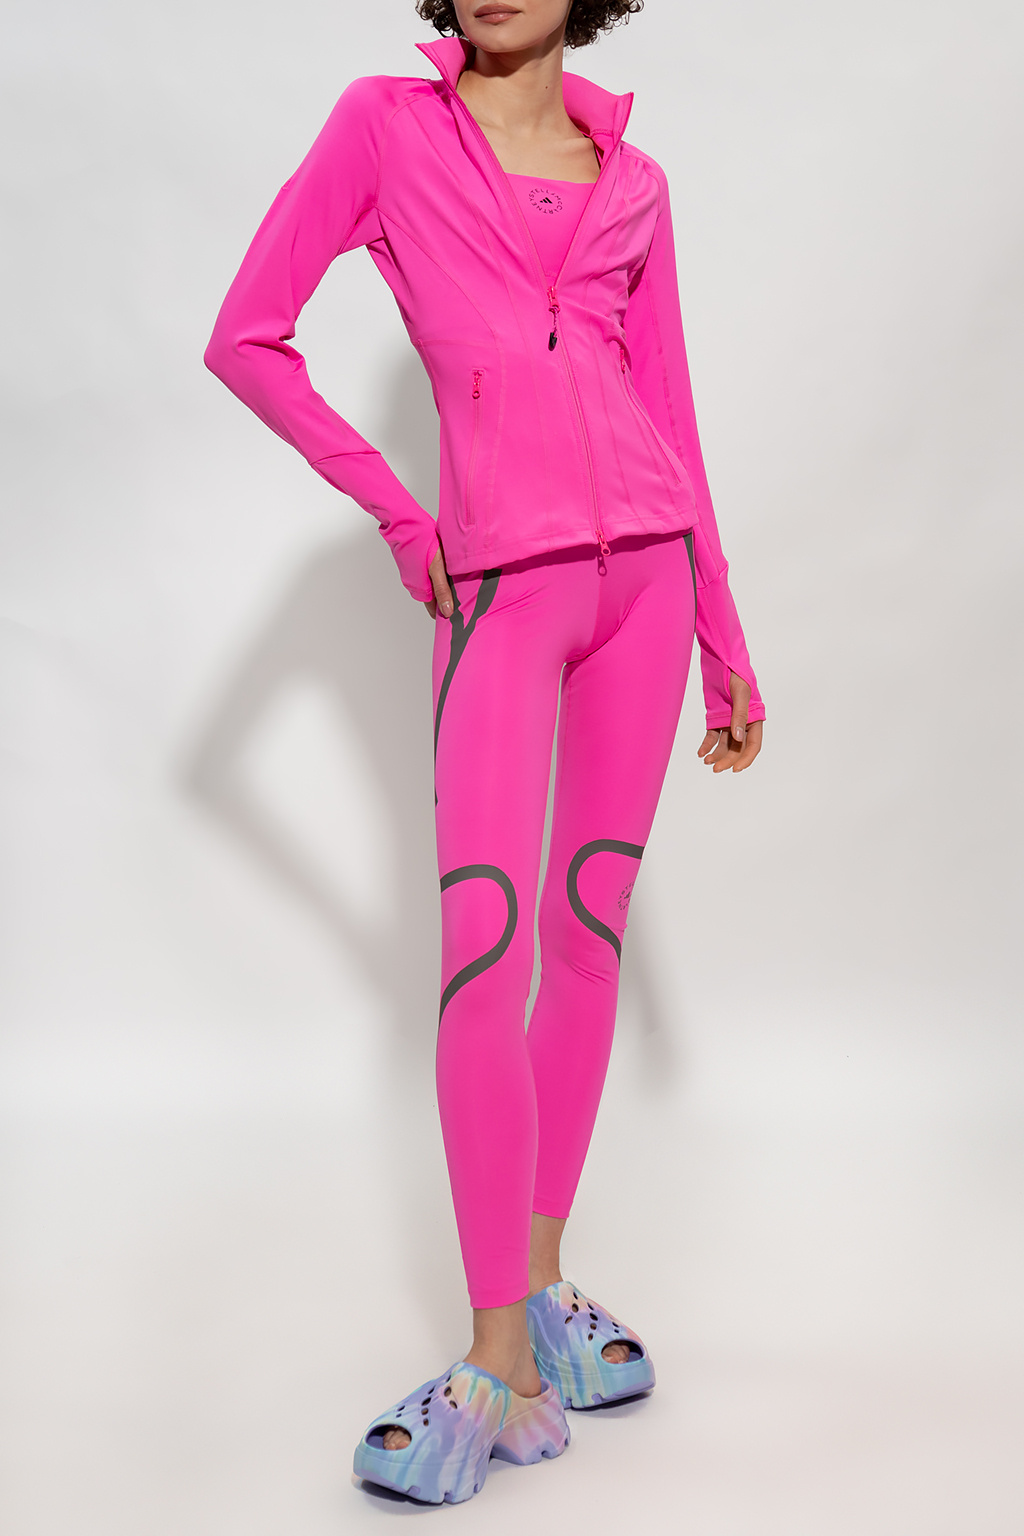 ADIDAS by Stella McCartney adidas slip on pink malaysia dress code youtube